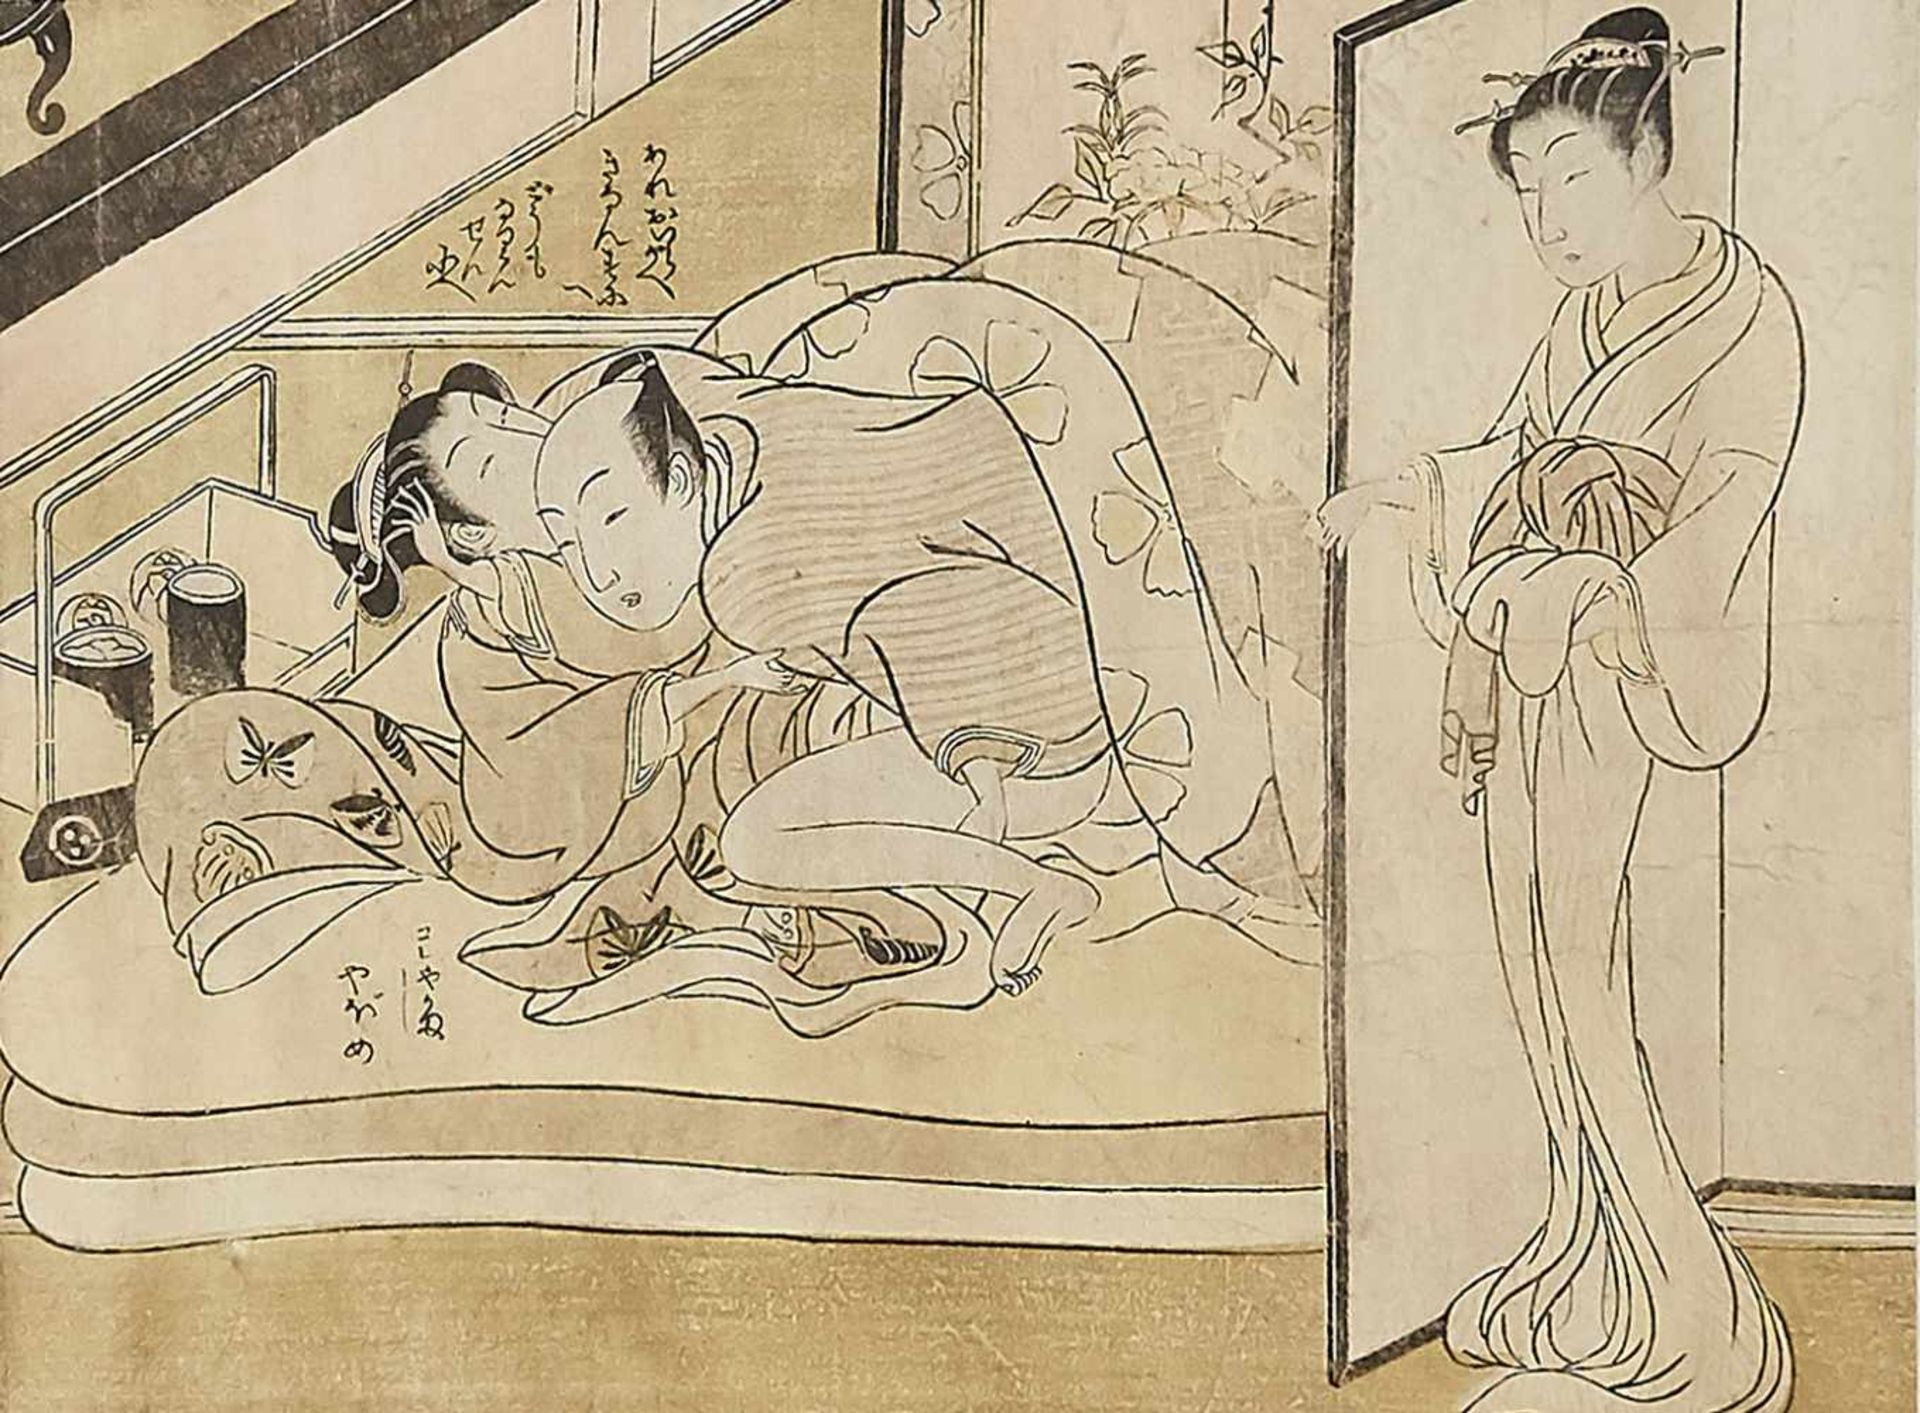 Shunga roll painting by Isoda Koryusai (pupil of Harunobo), Japan, 1770, 7 woodcuts in